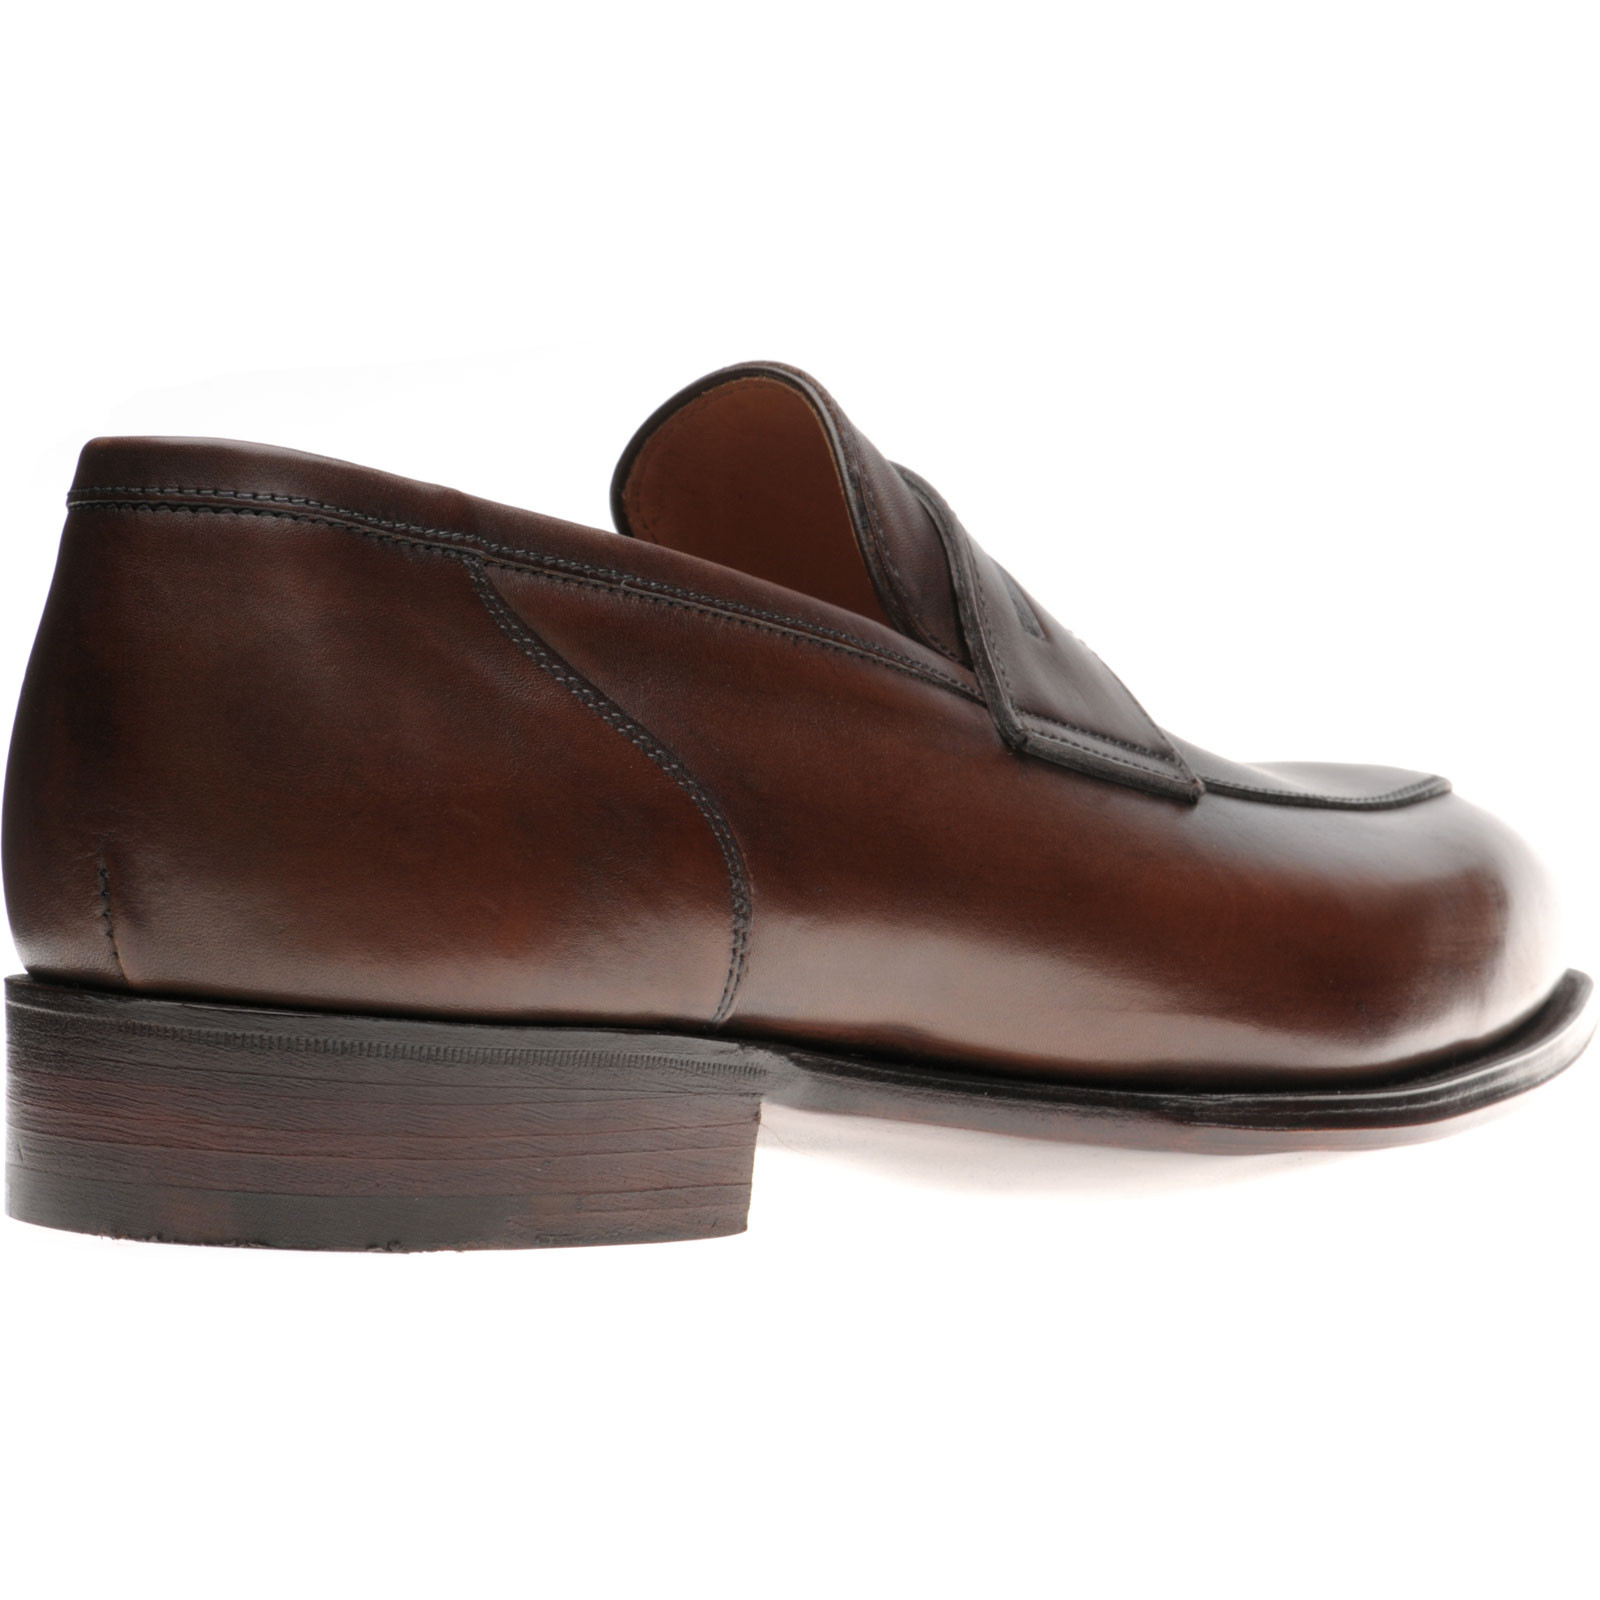 Herring shoes | Herring Premier | James in Espresso Calf at Herring Shoes